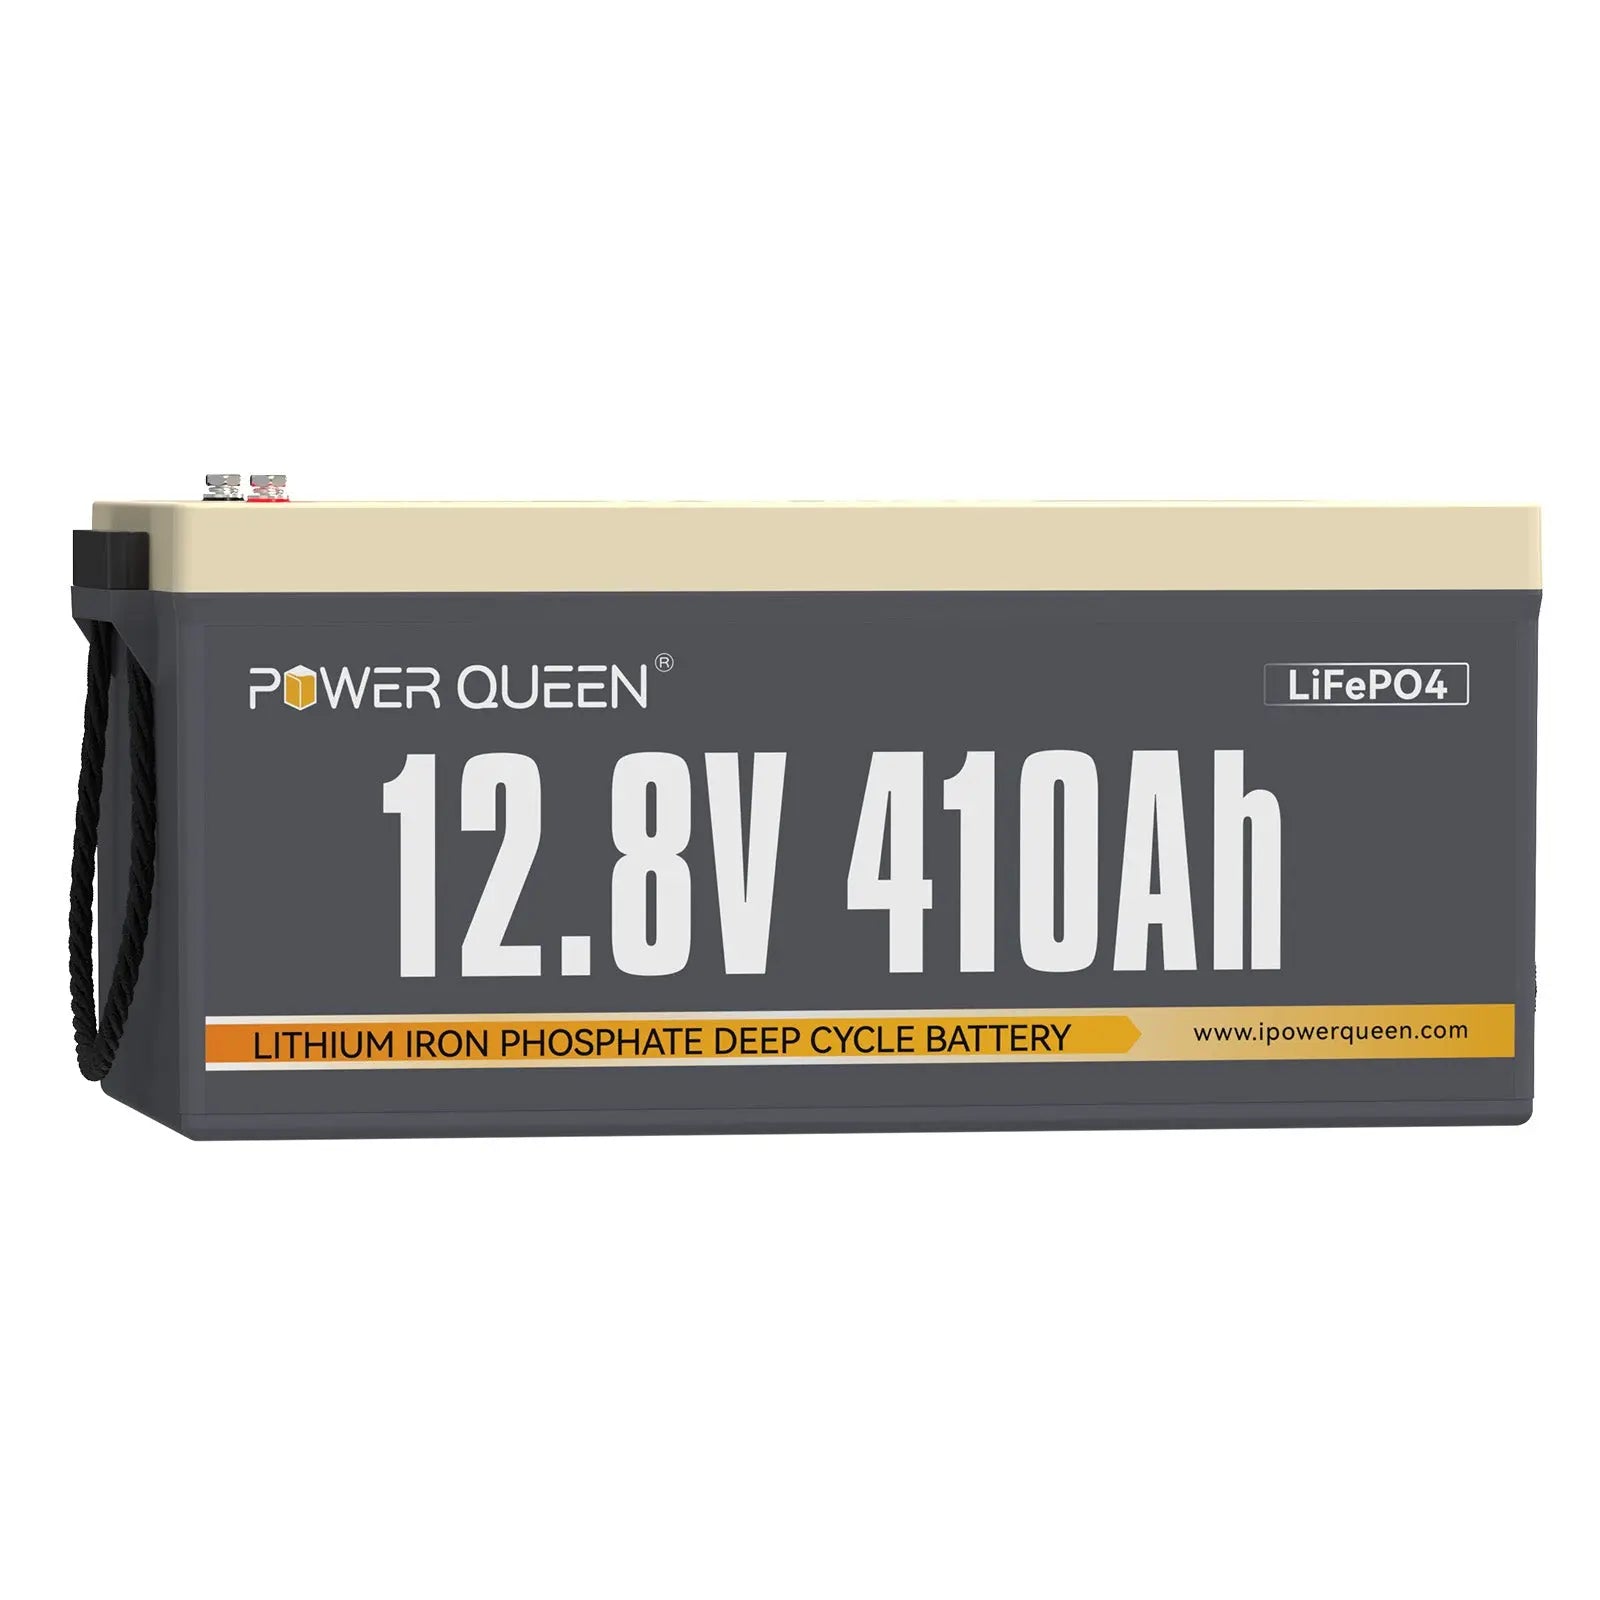 [Only $1187.49] Power Queen 12.8V 410Ah LiFePO4 Battery, Built-in 250A BMS, Match BCI Group 8D Battery Box Power Queen